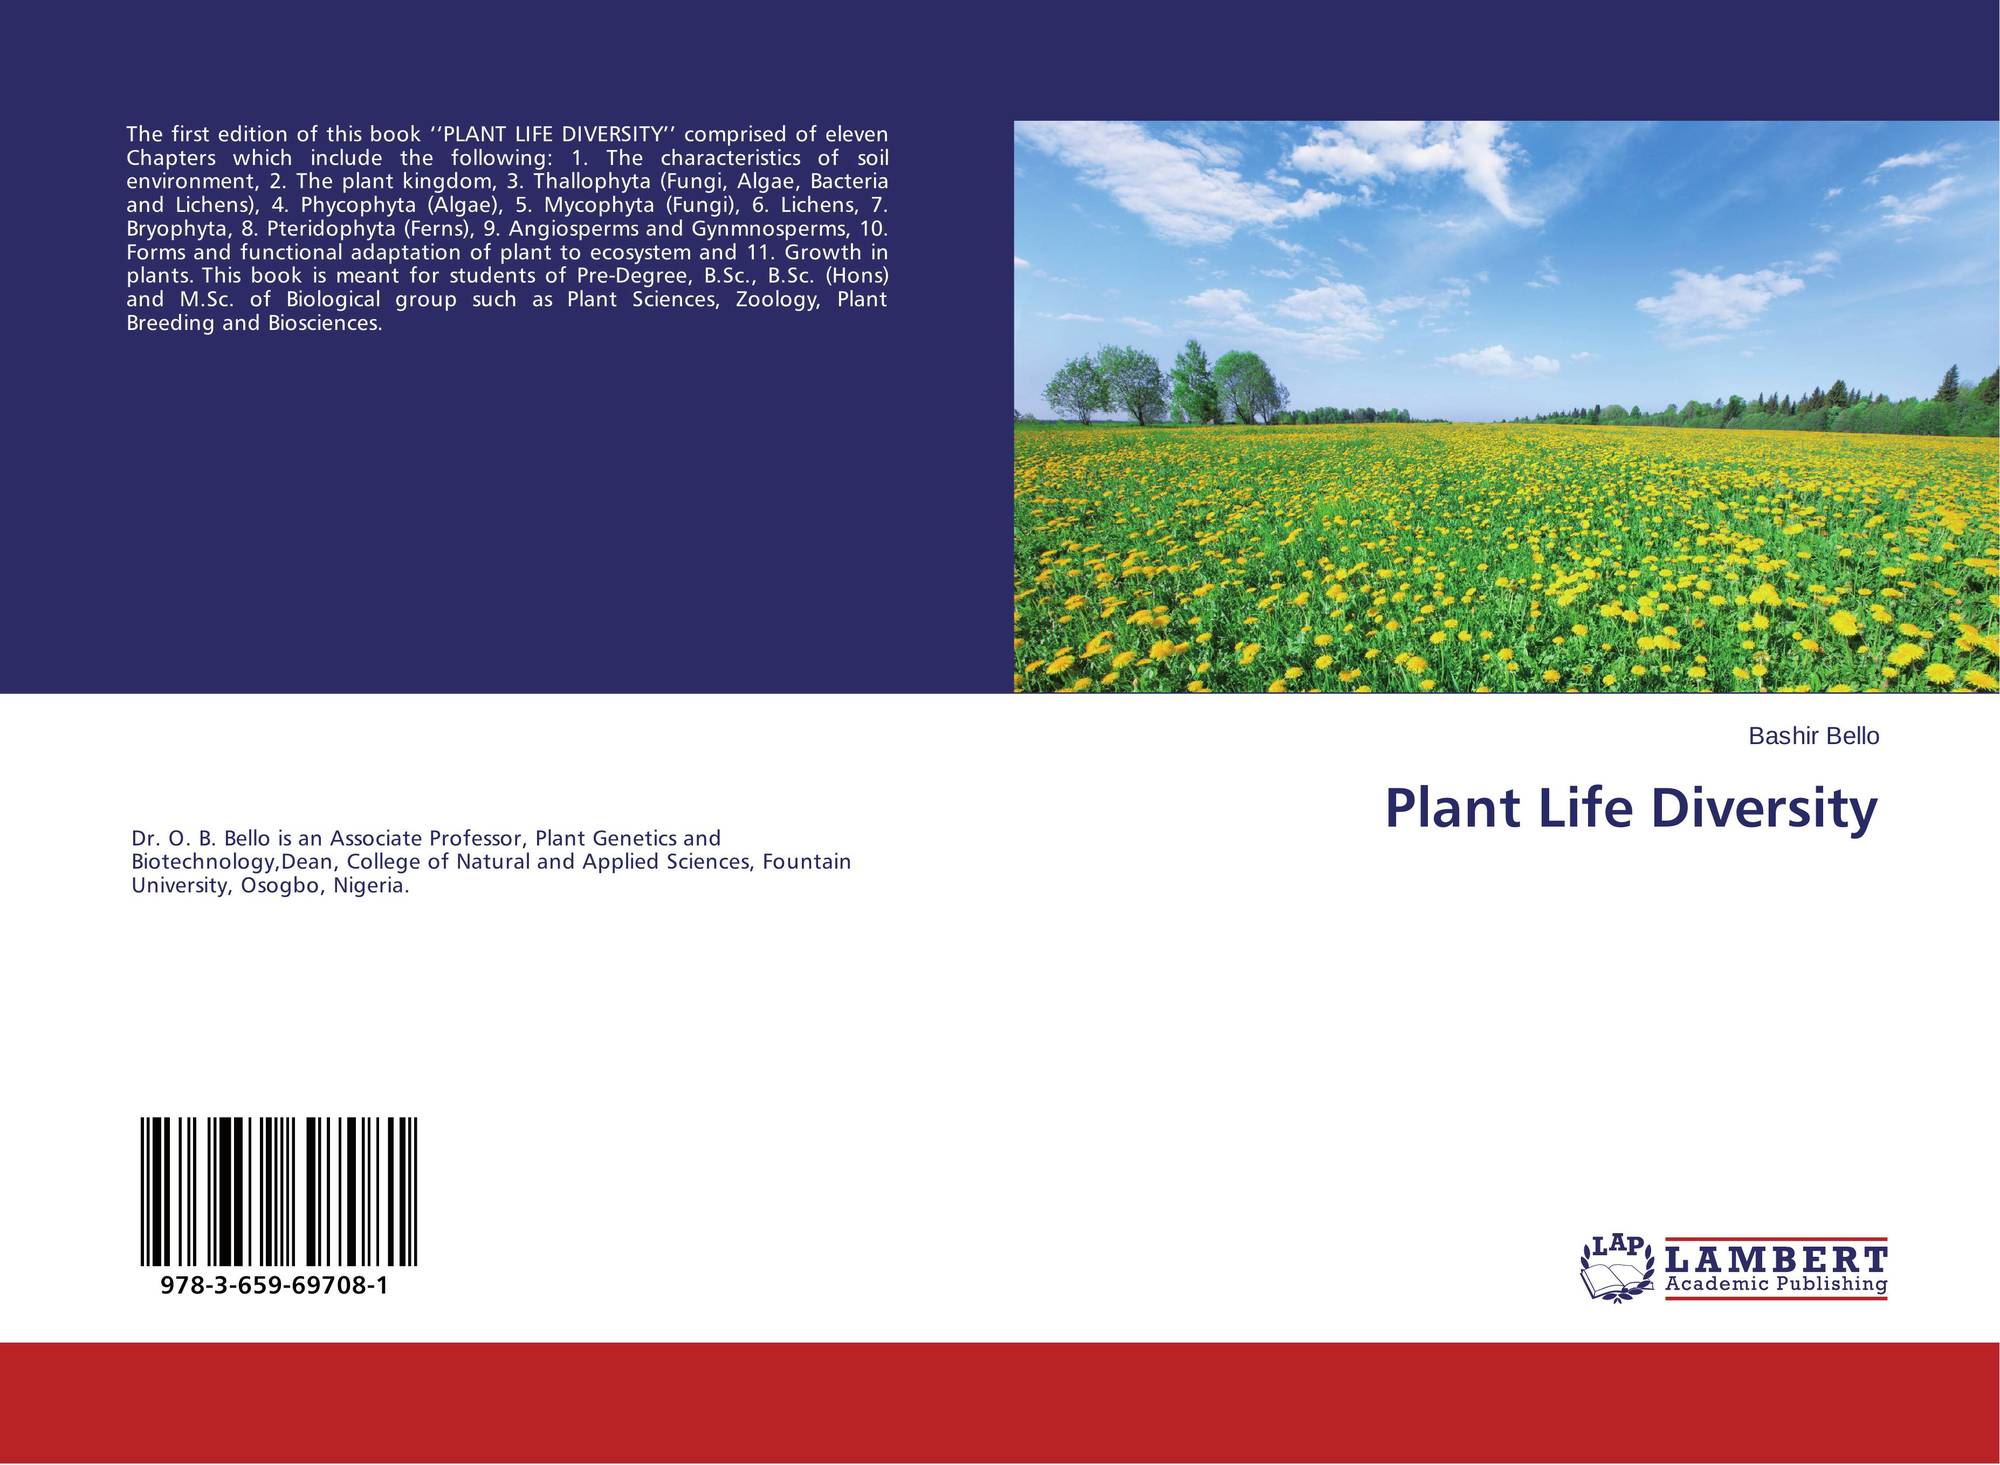 Handbook of Plant Science.